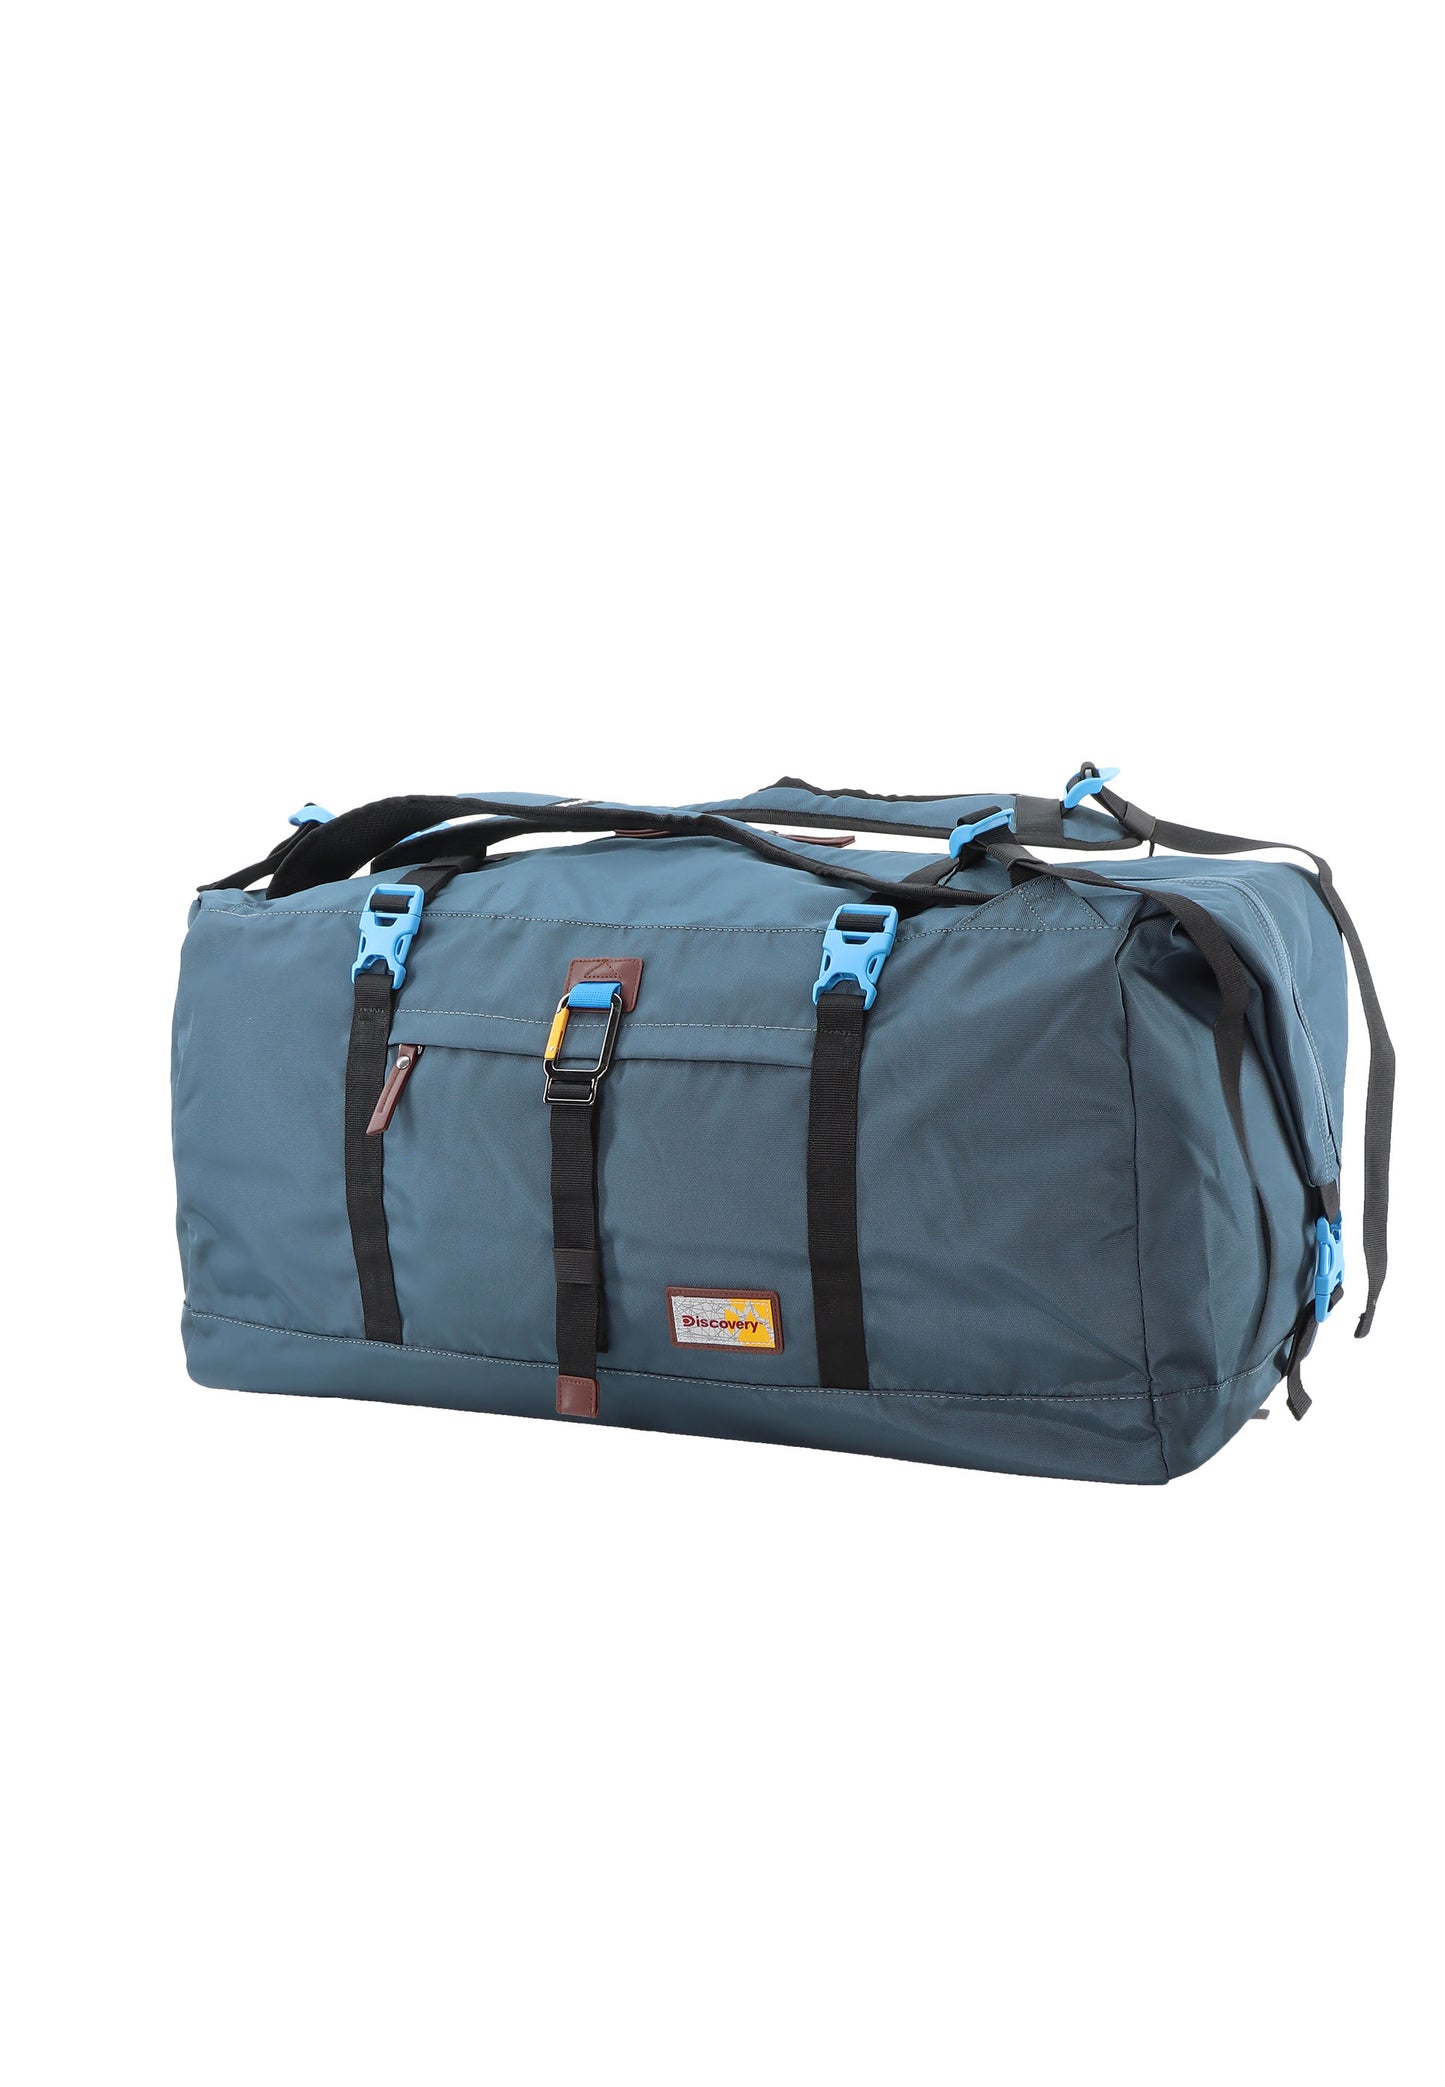 Sac de sport / sac de voyage / sac de sport Discovery - 64 litres (grand) - RPET - Icon - Bleu Pétrole